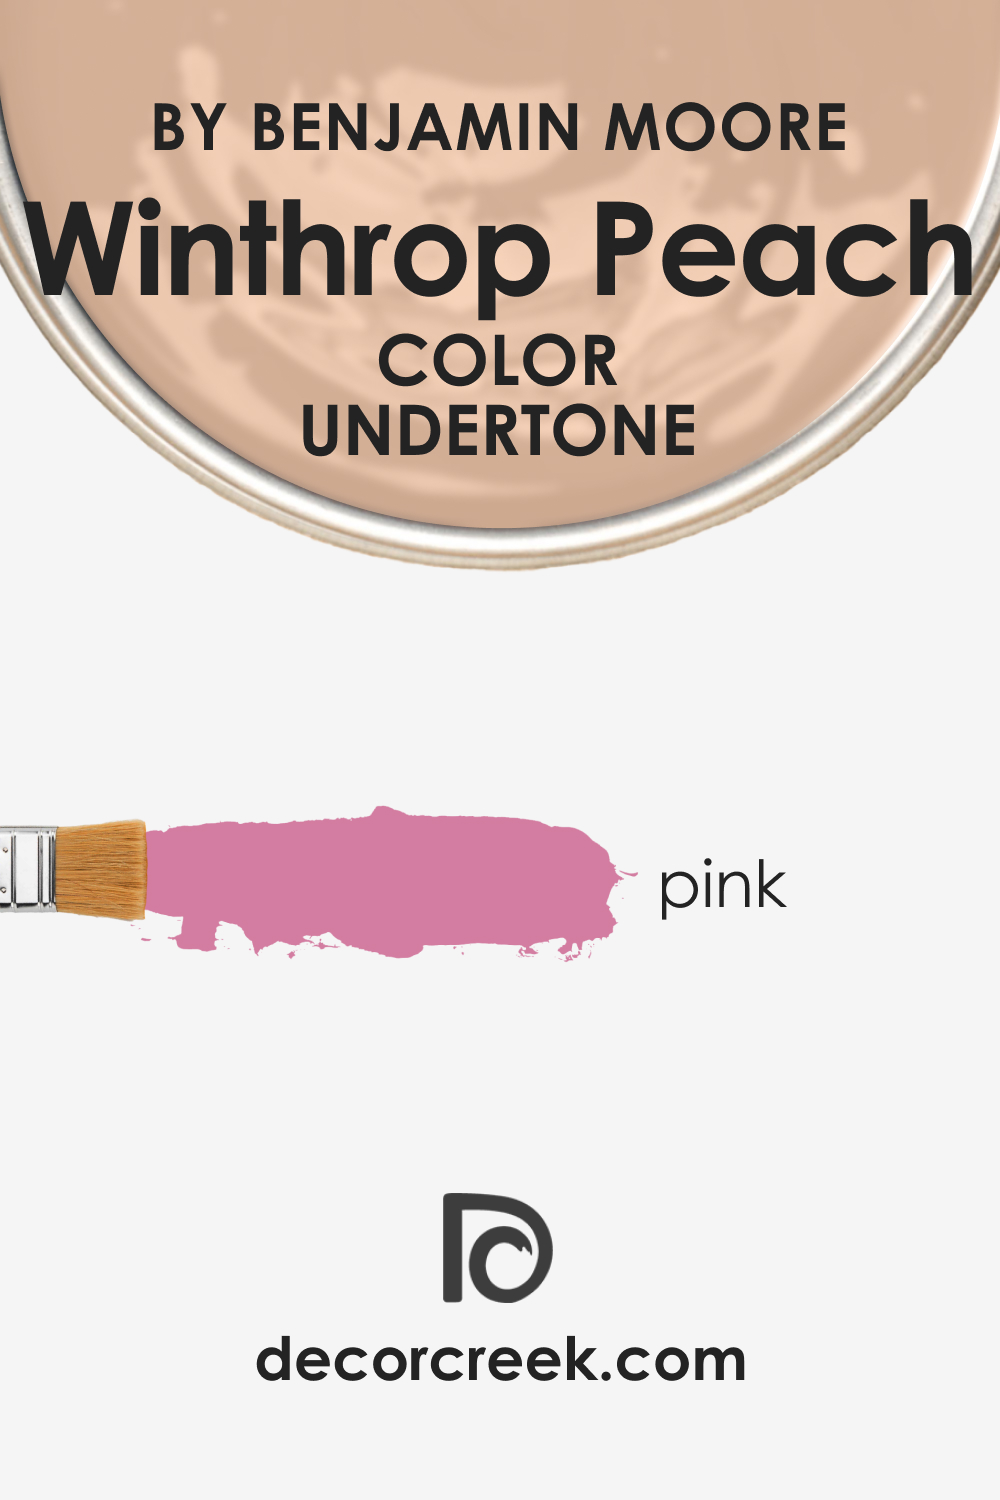 Undertones of Winthrop Peach HC-55